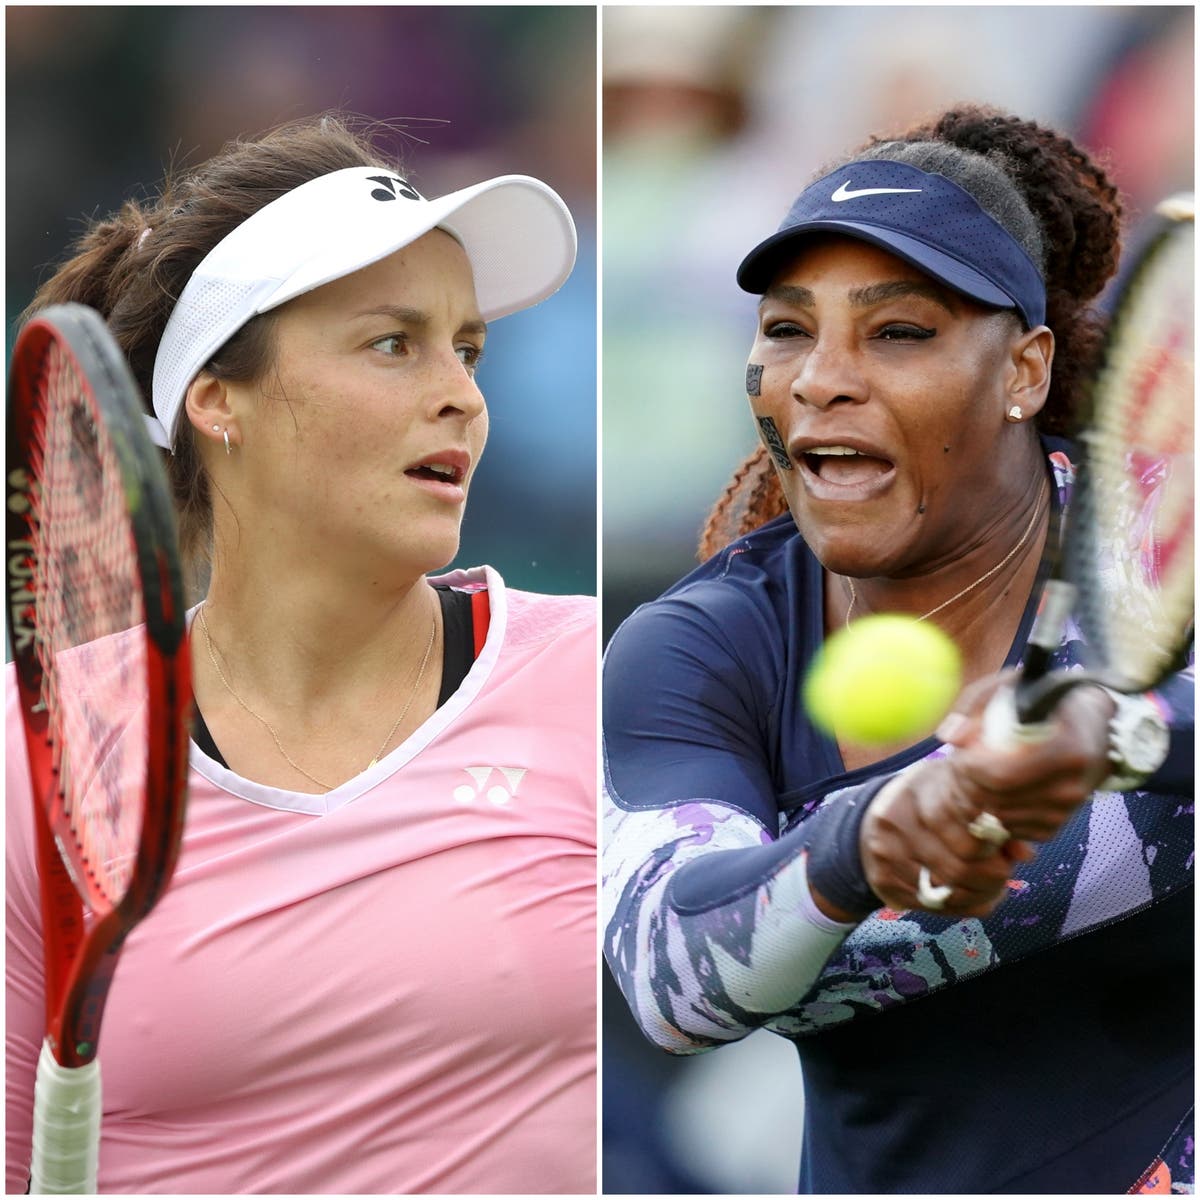 Tatjana Maria and Serena Williams – Mums out to make their mark at Wimbledon